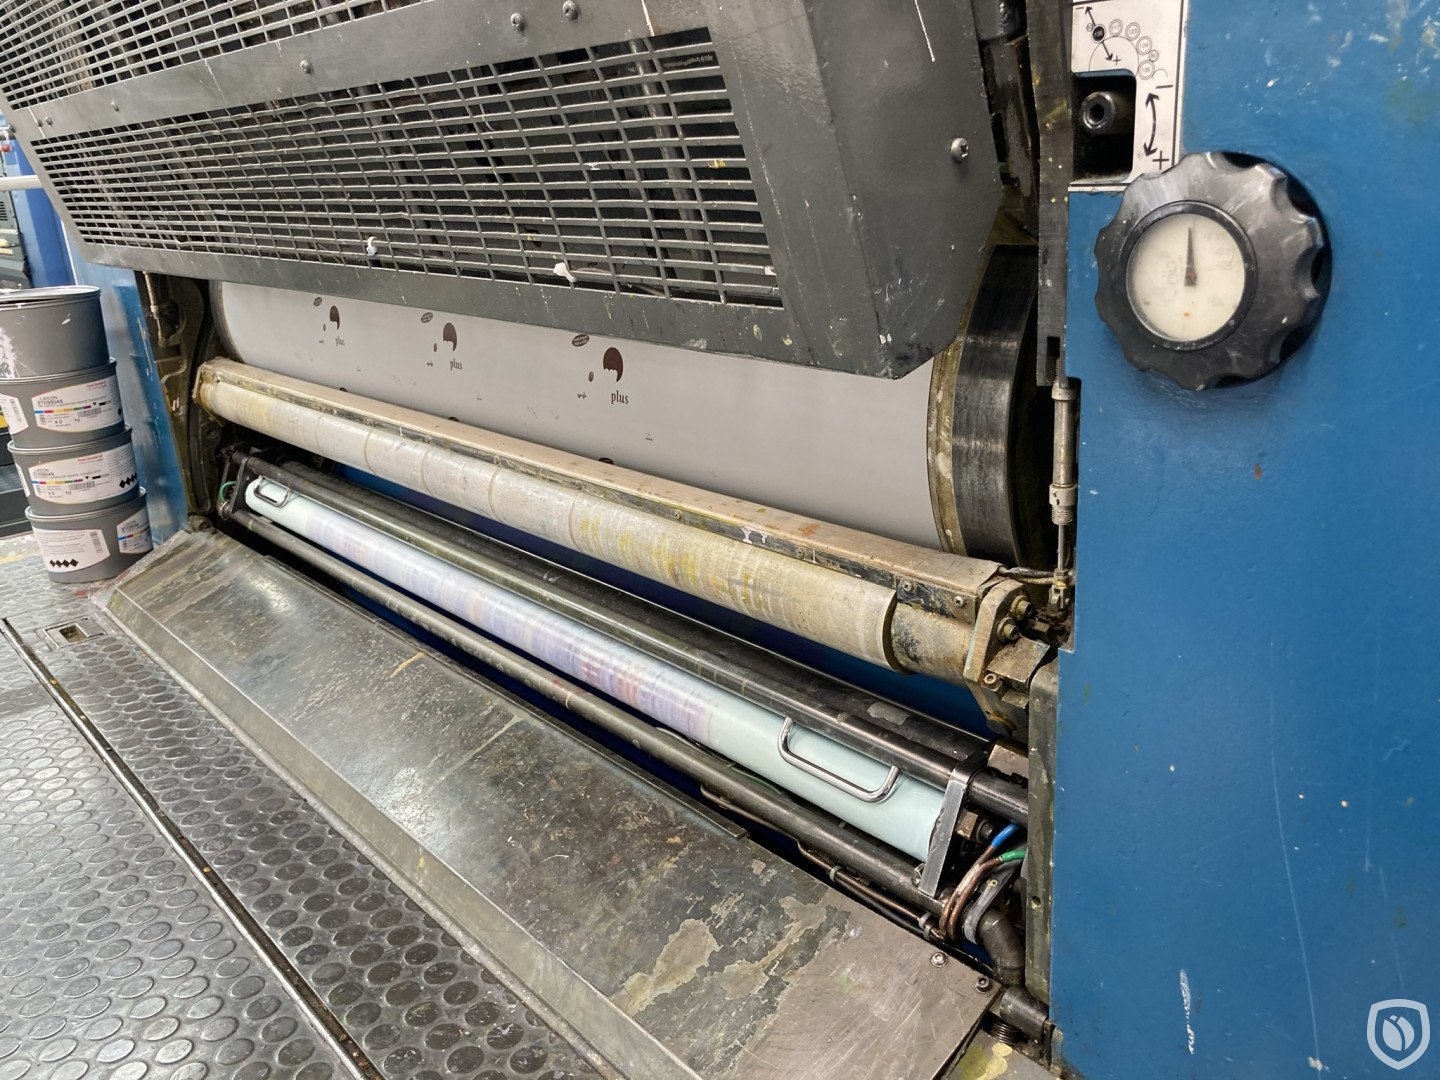 Automatic washing unit on each printing press